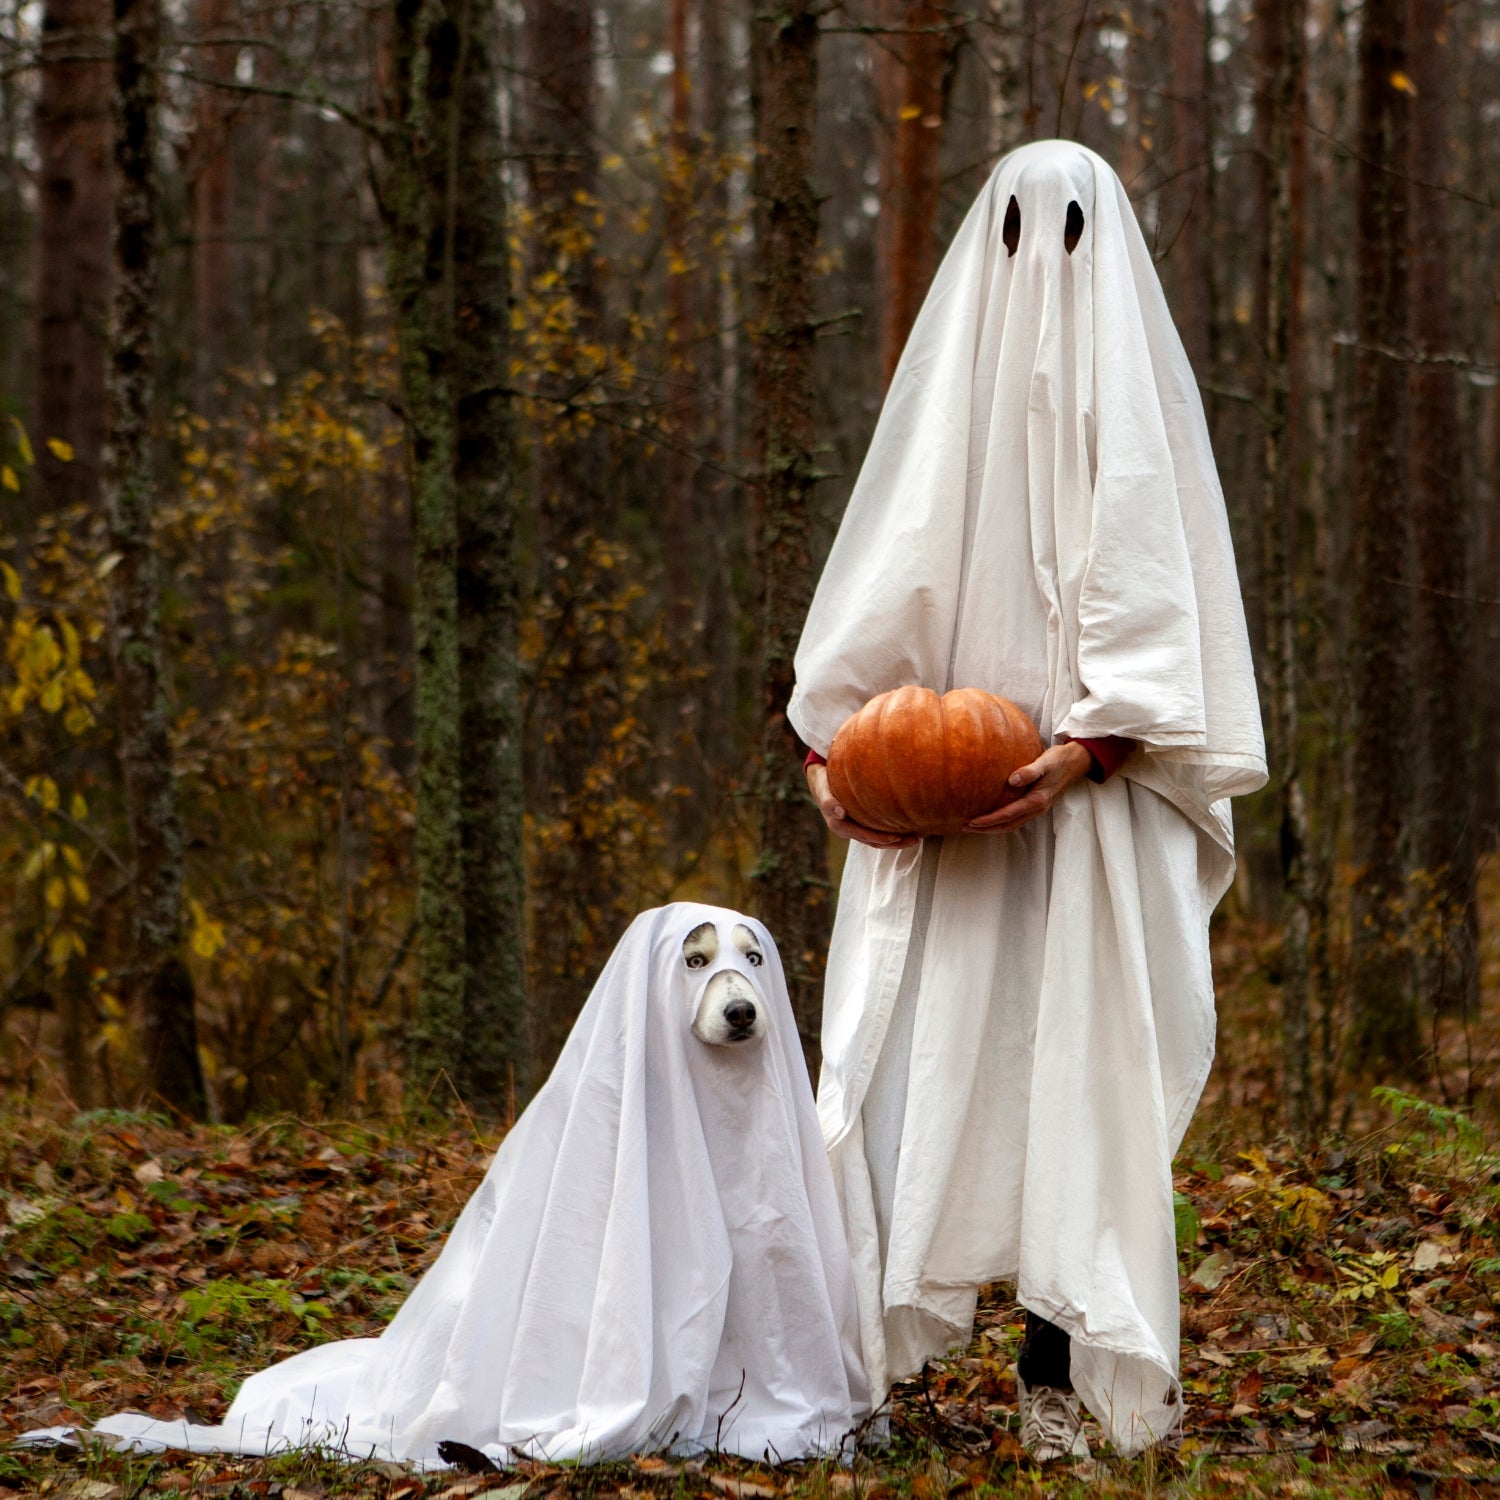 Dress Like Jake Long  Jake long, Cute couple halloween costumes